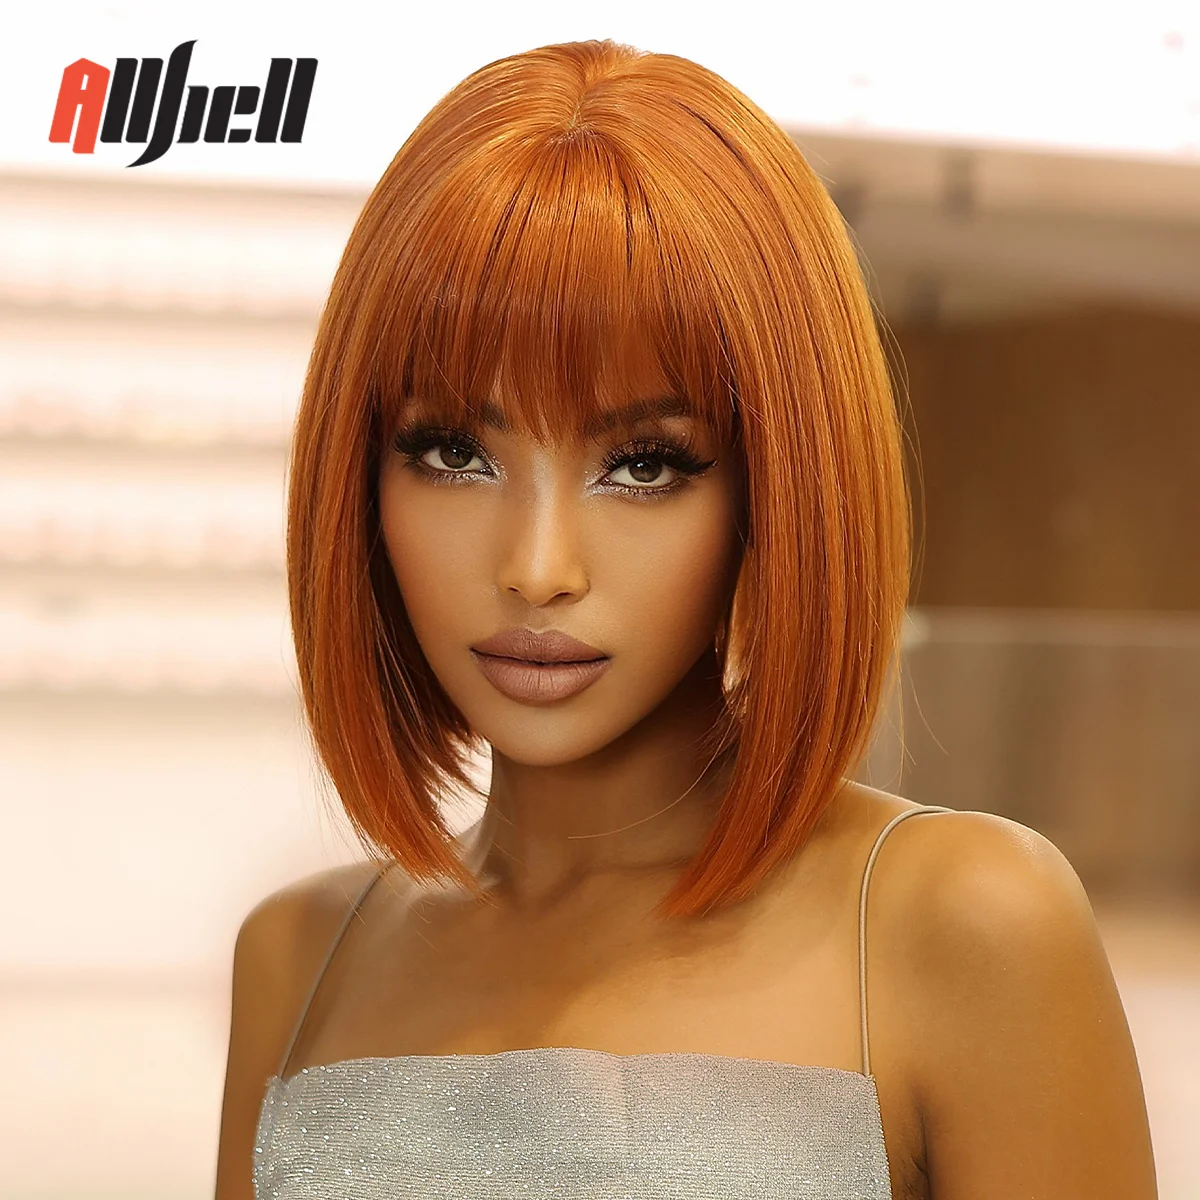 Pelucas flequillo para mujeres negras, pelo artificial de fibra Natural resistente al calor, color naranja y rojo, para uso diario _ - AliExpress Mobile